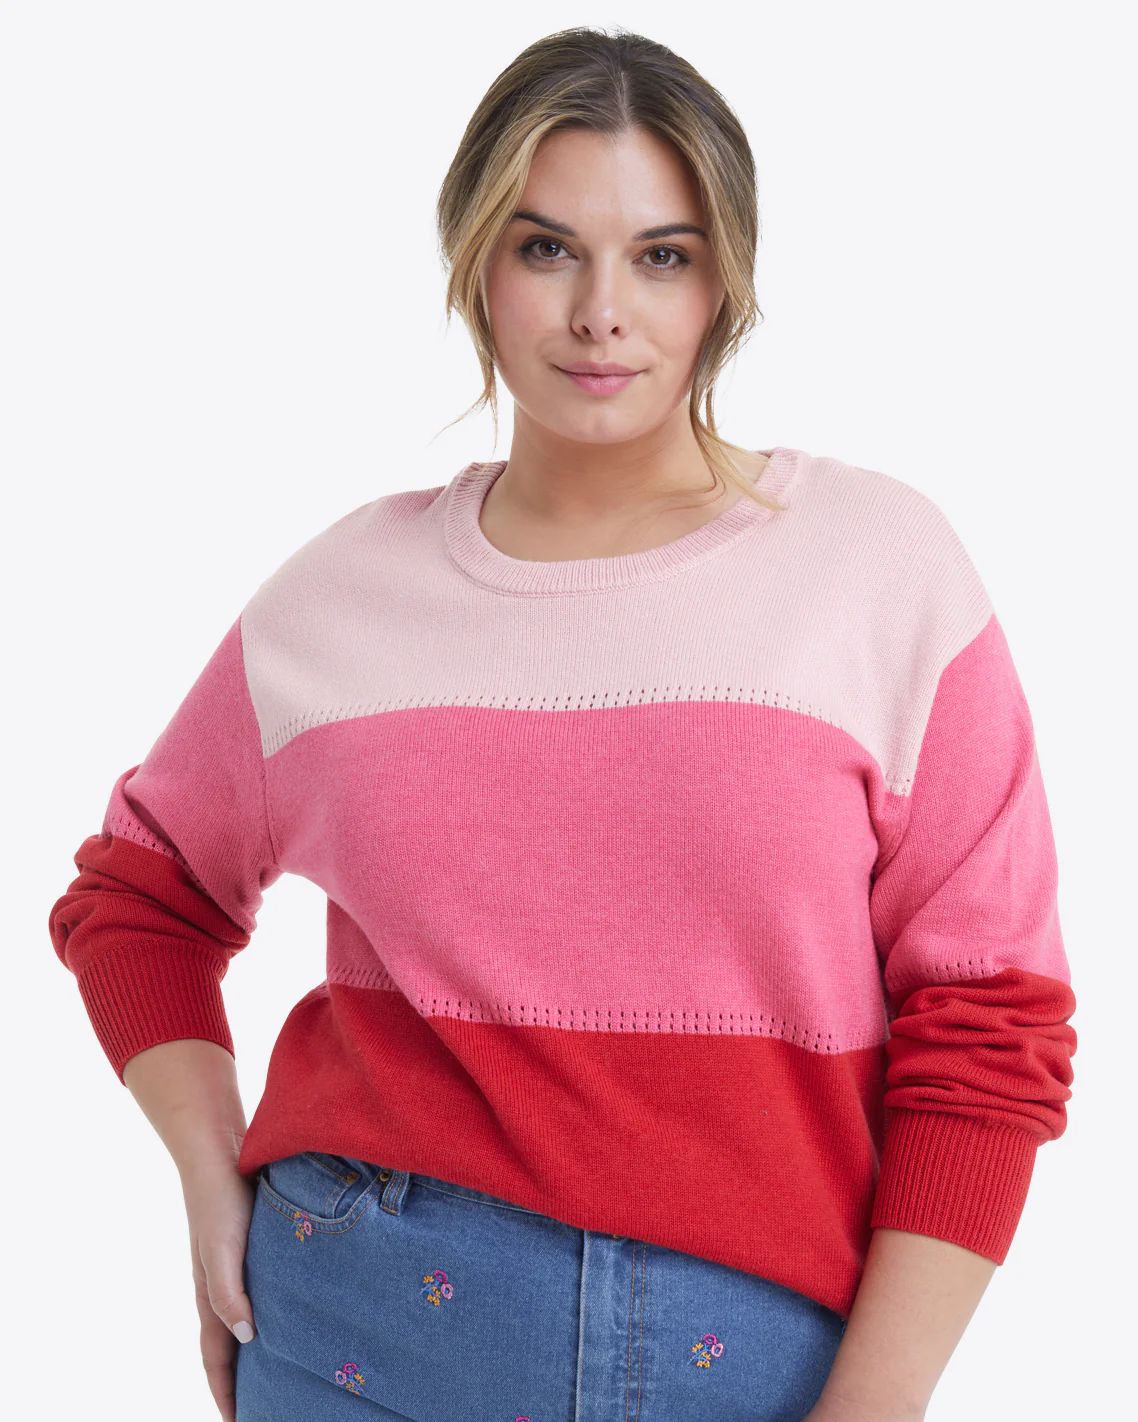 Crewneck Sweater in Pink Colorblock | Draper James (US)